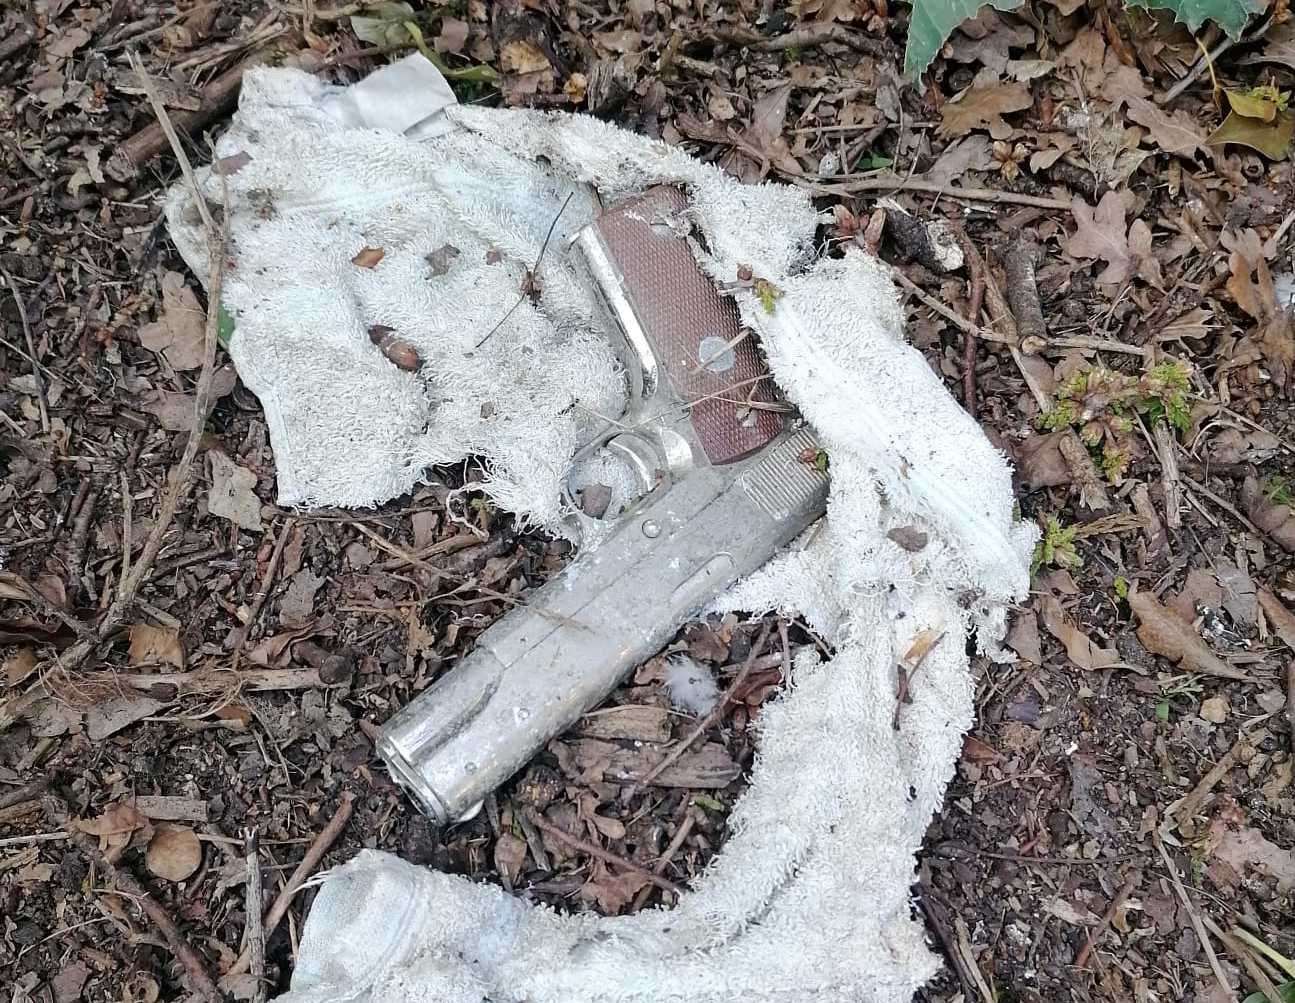 The gun found in Gillingham Park, near Oxford Road